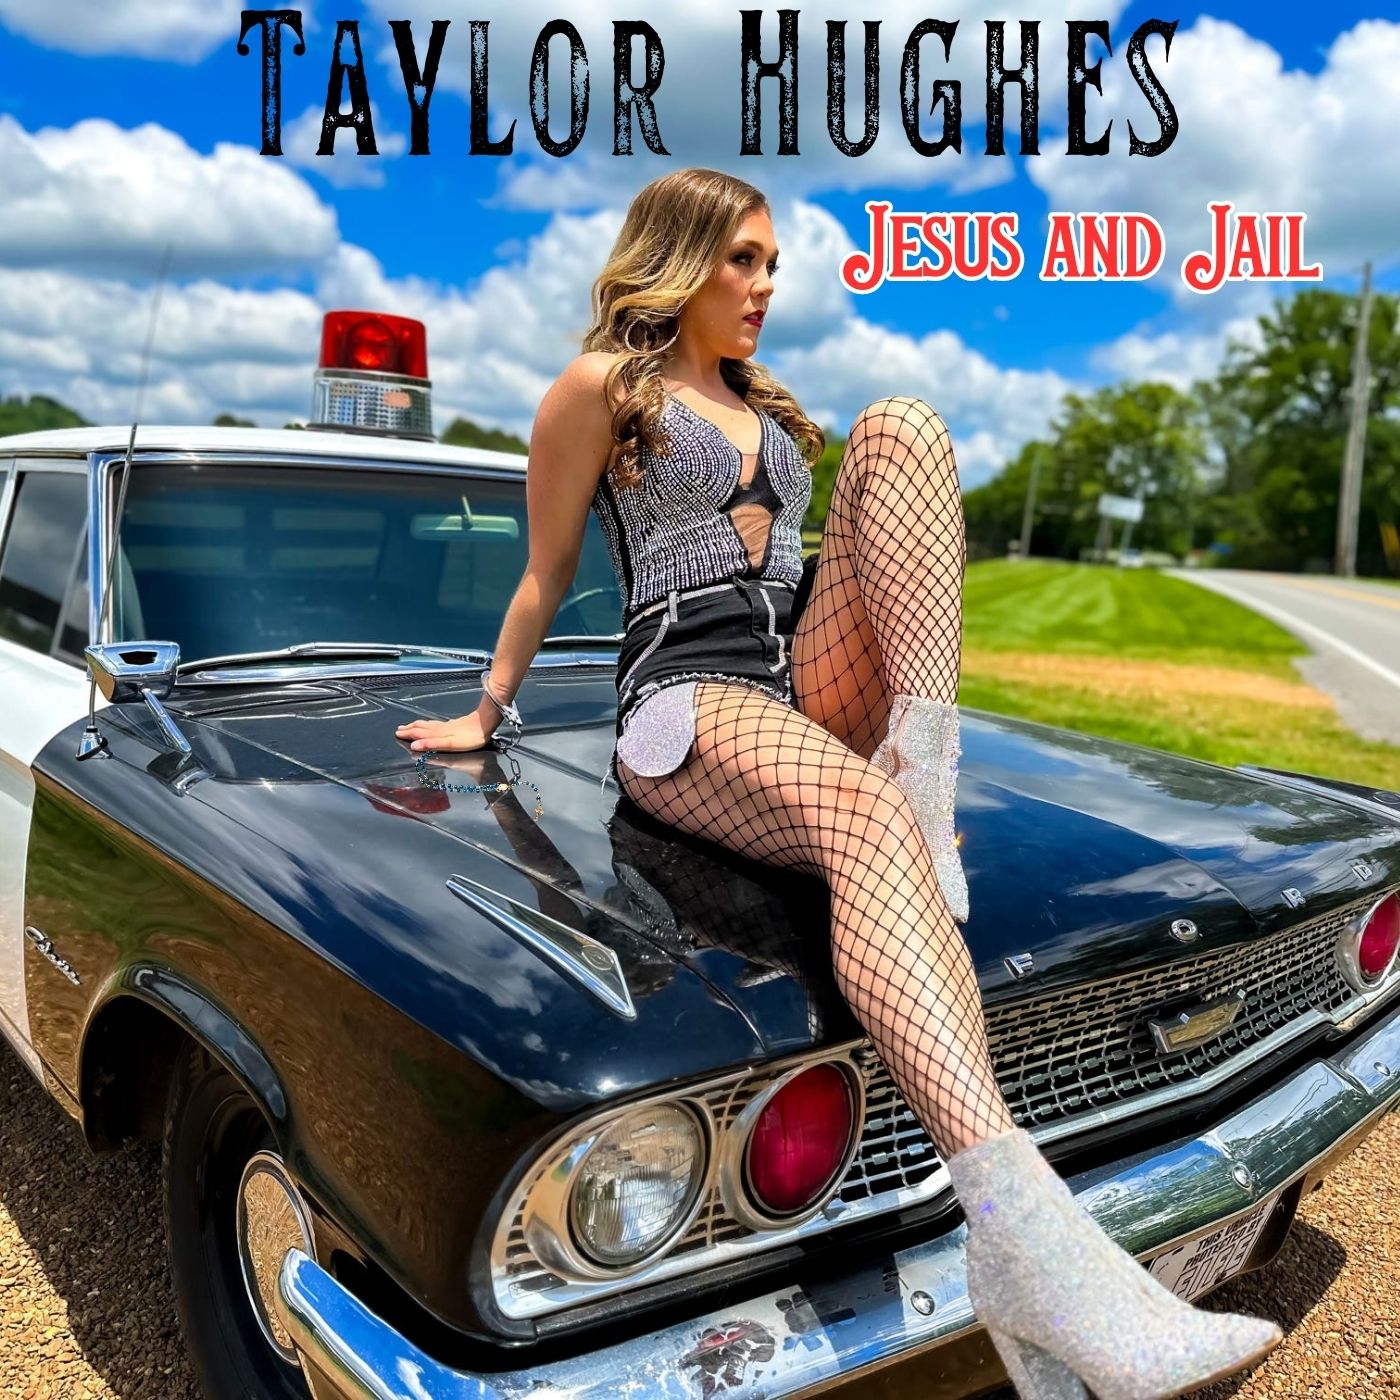 Taylor Hughes "Jesus And Jail"